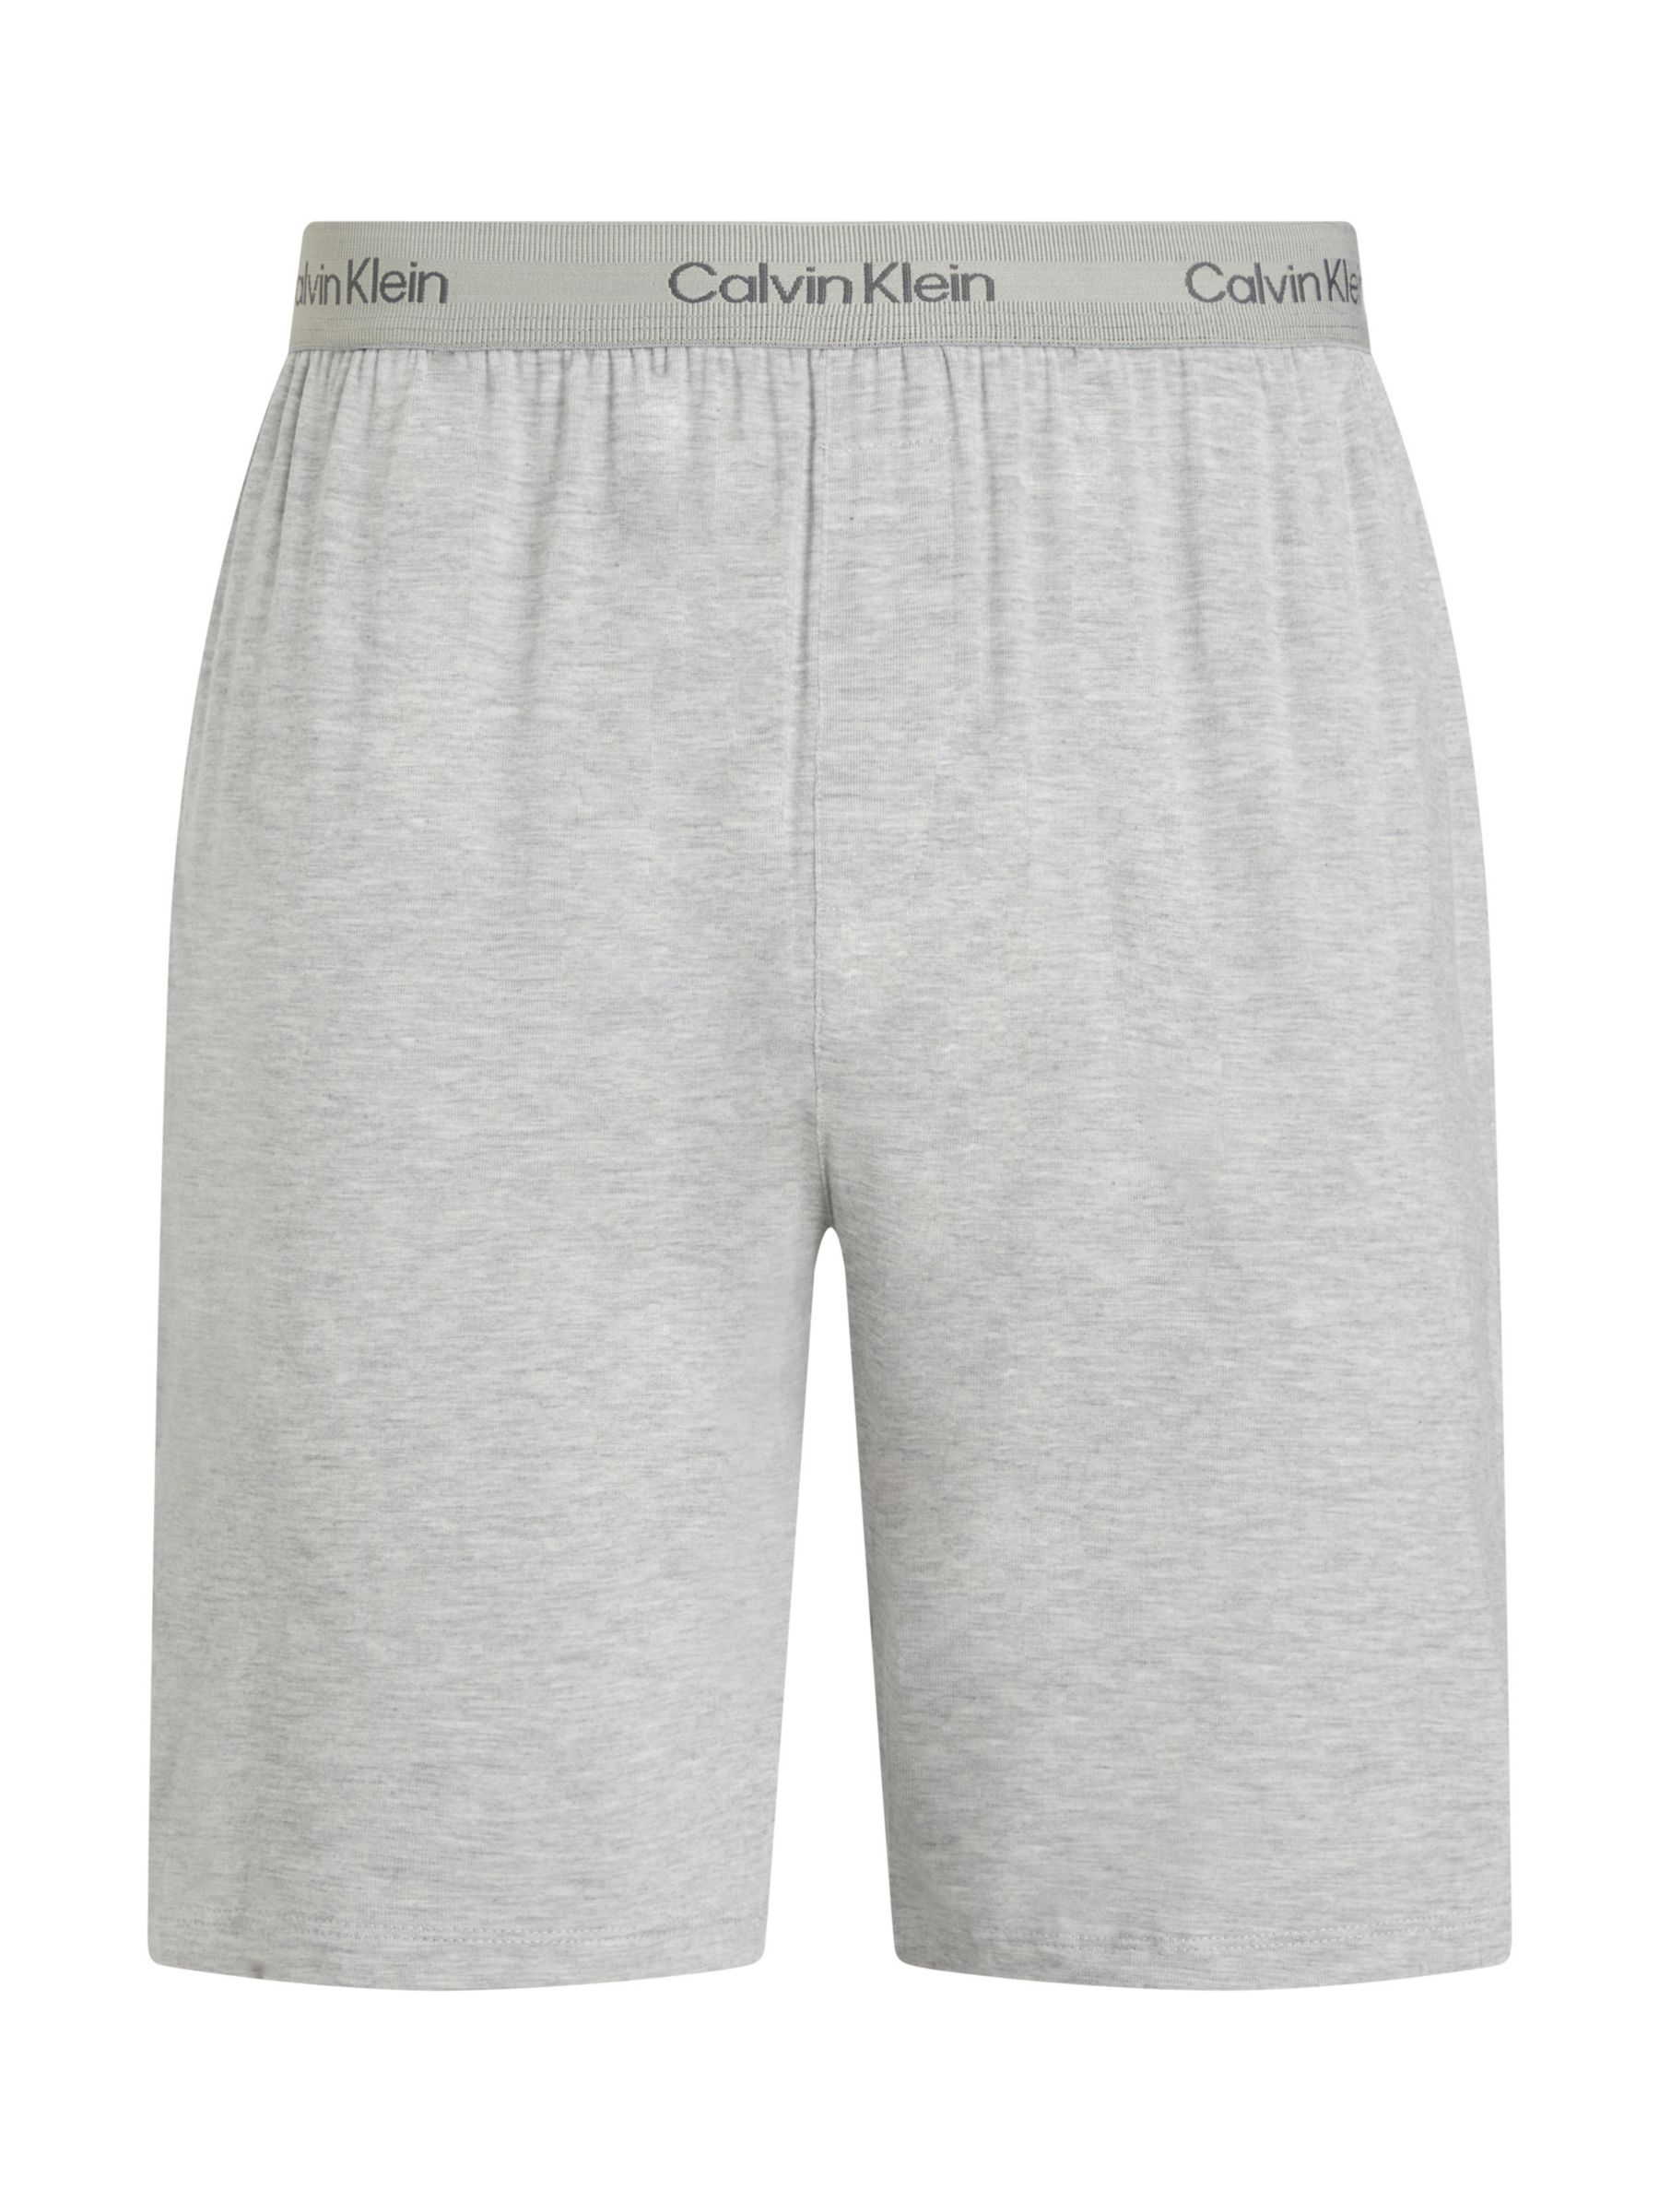 Calvin Klein Ultra Soft Modern Lounge Shorts, Grey, L